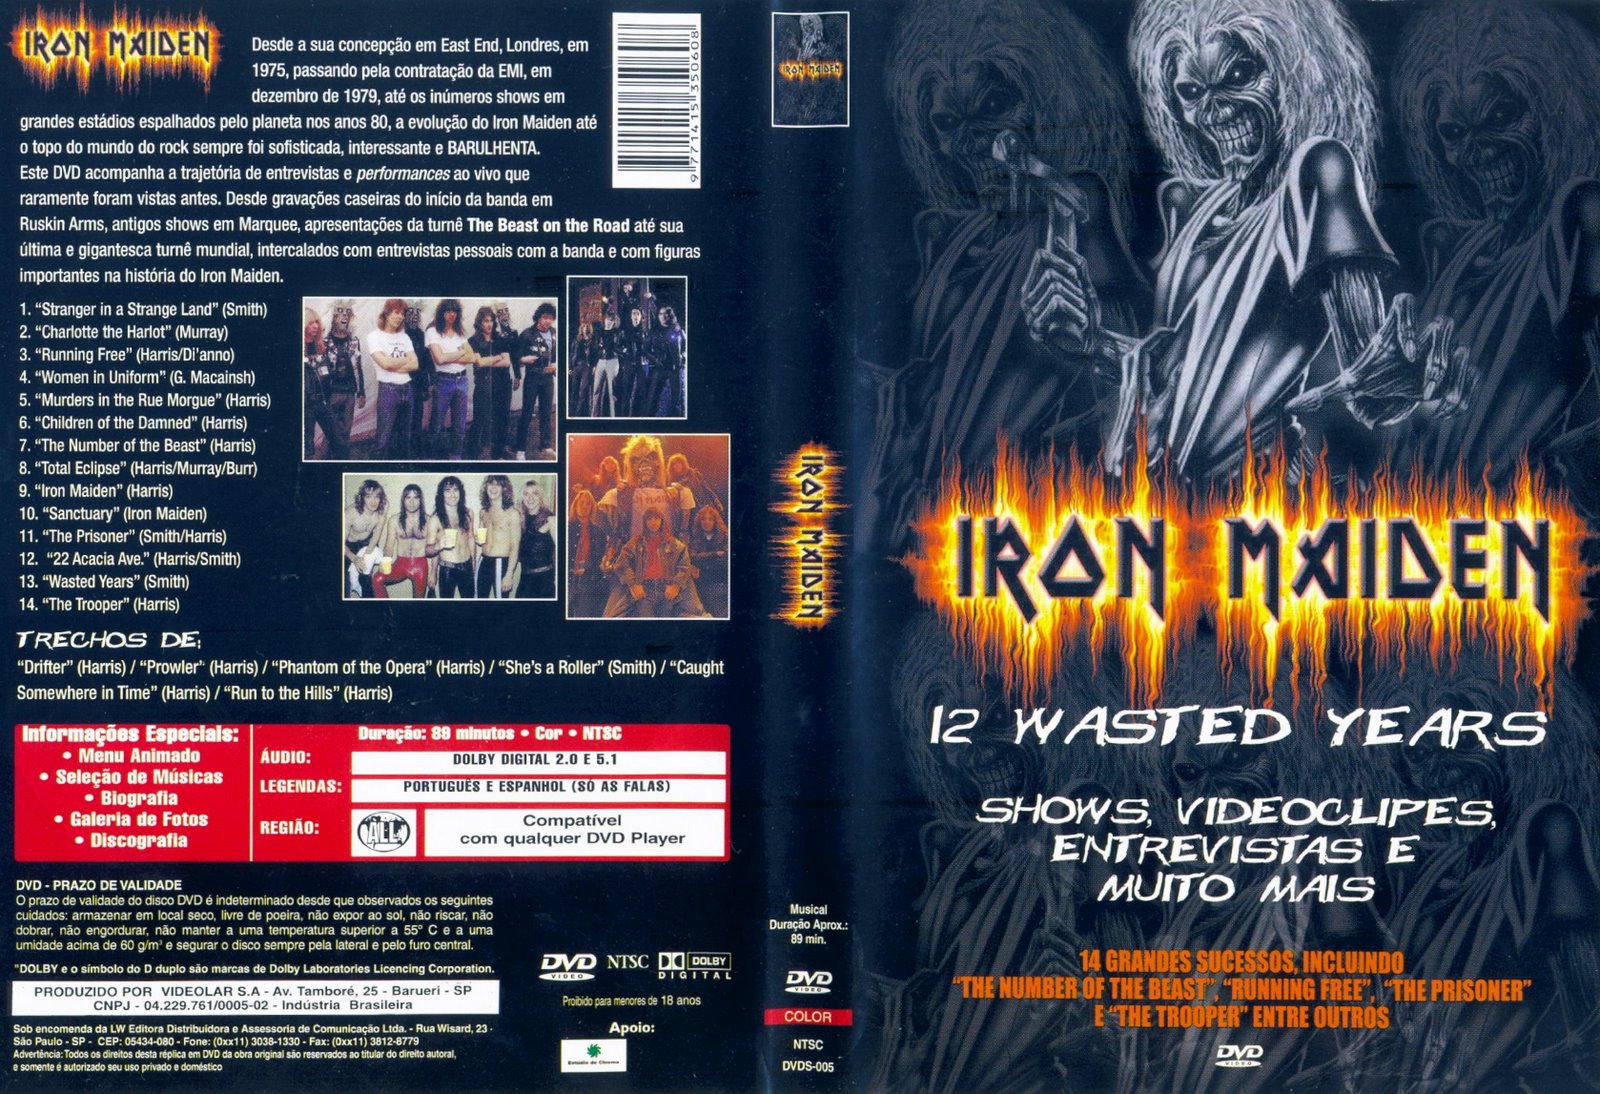 http://3.bp.blogspot.com/_brcl7Spzbn4/TJDPJJnQoLI/AAAAAAAAAjc/7RUdPVRsRqk/s1600/Iron+Maiden+-+12+Wasted+Years.jpg